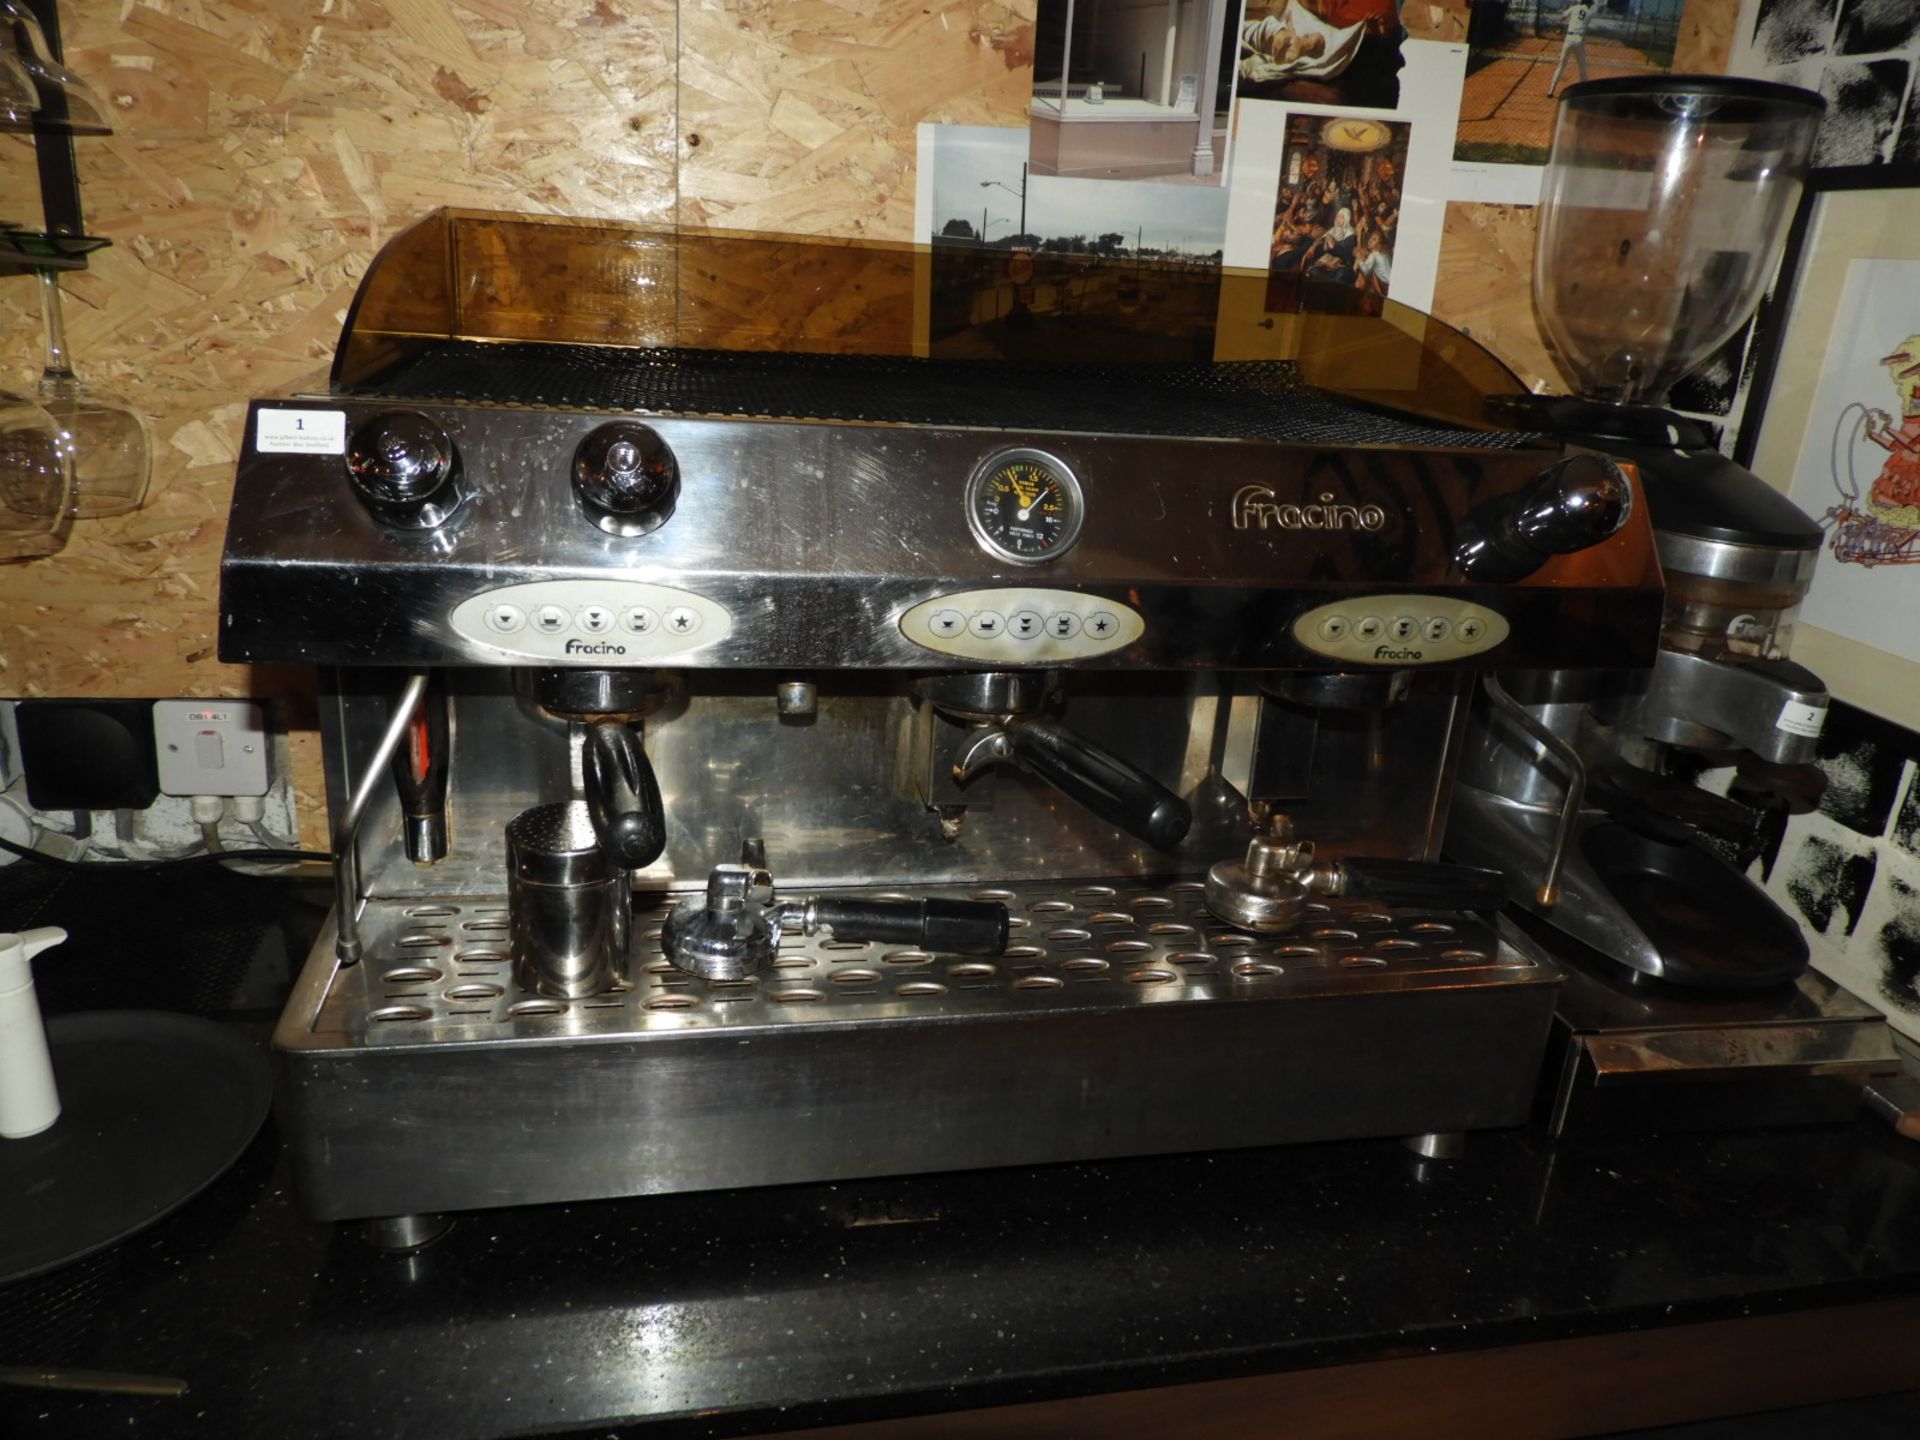 *Francino Three Head Espresso Coffee Machine